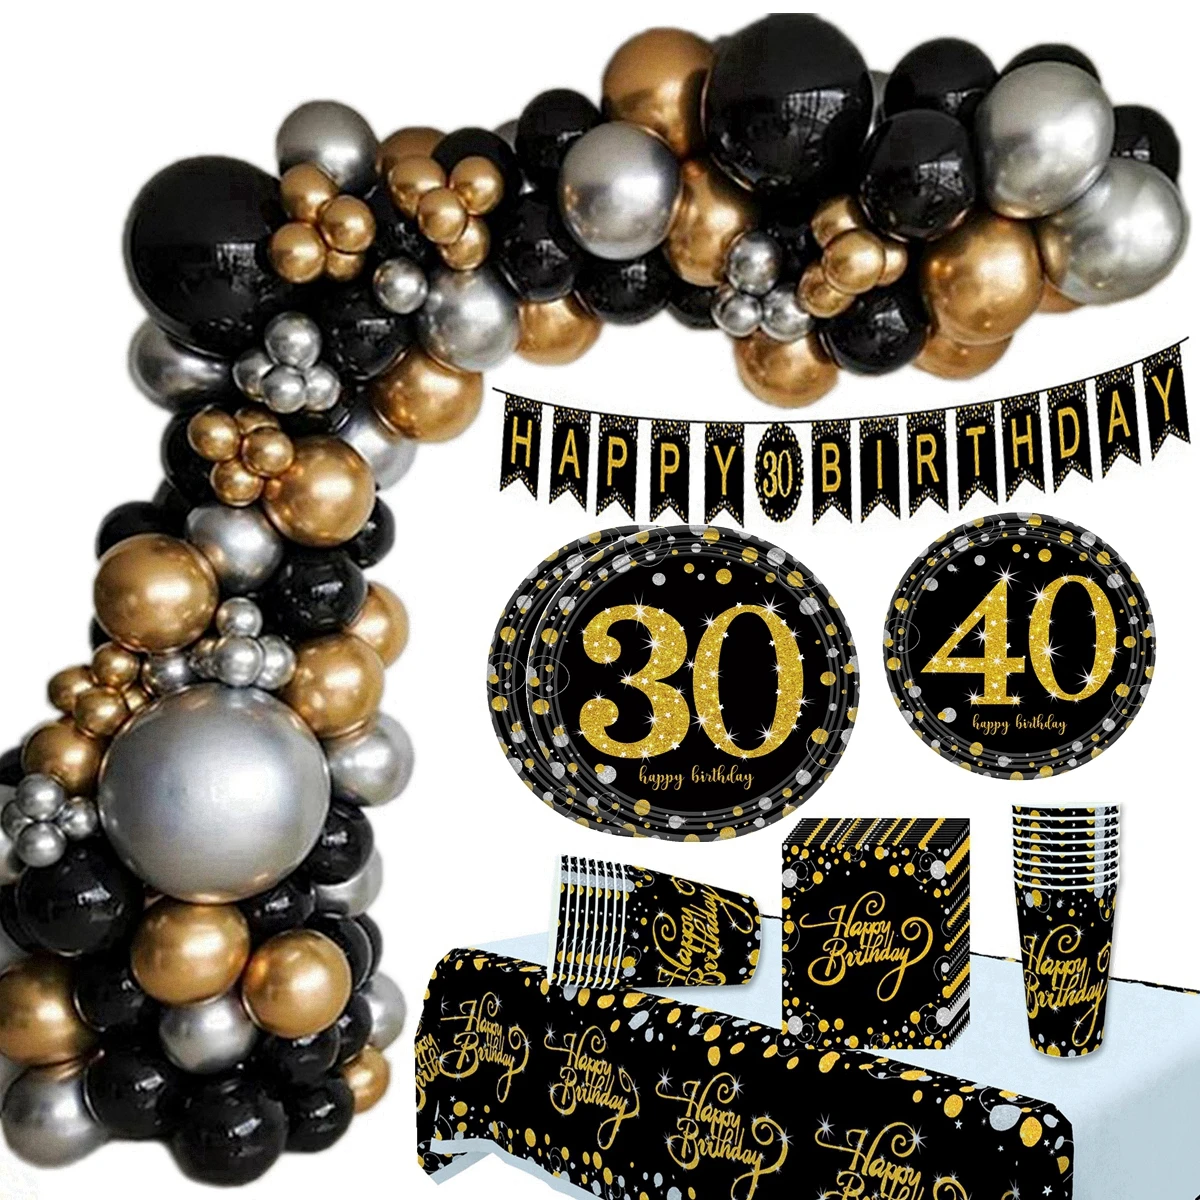 Black Gold Birthday Background 30 40 50 Years Birthday Party Decor Adult 30th 40th 50th Birthday.jpg